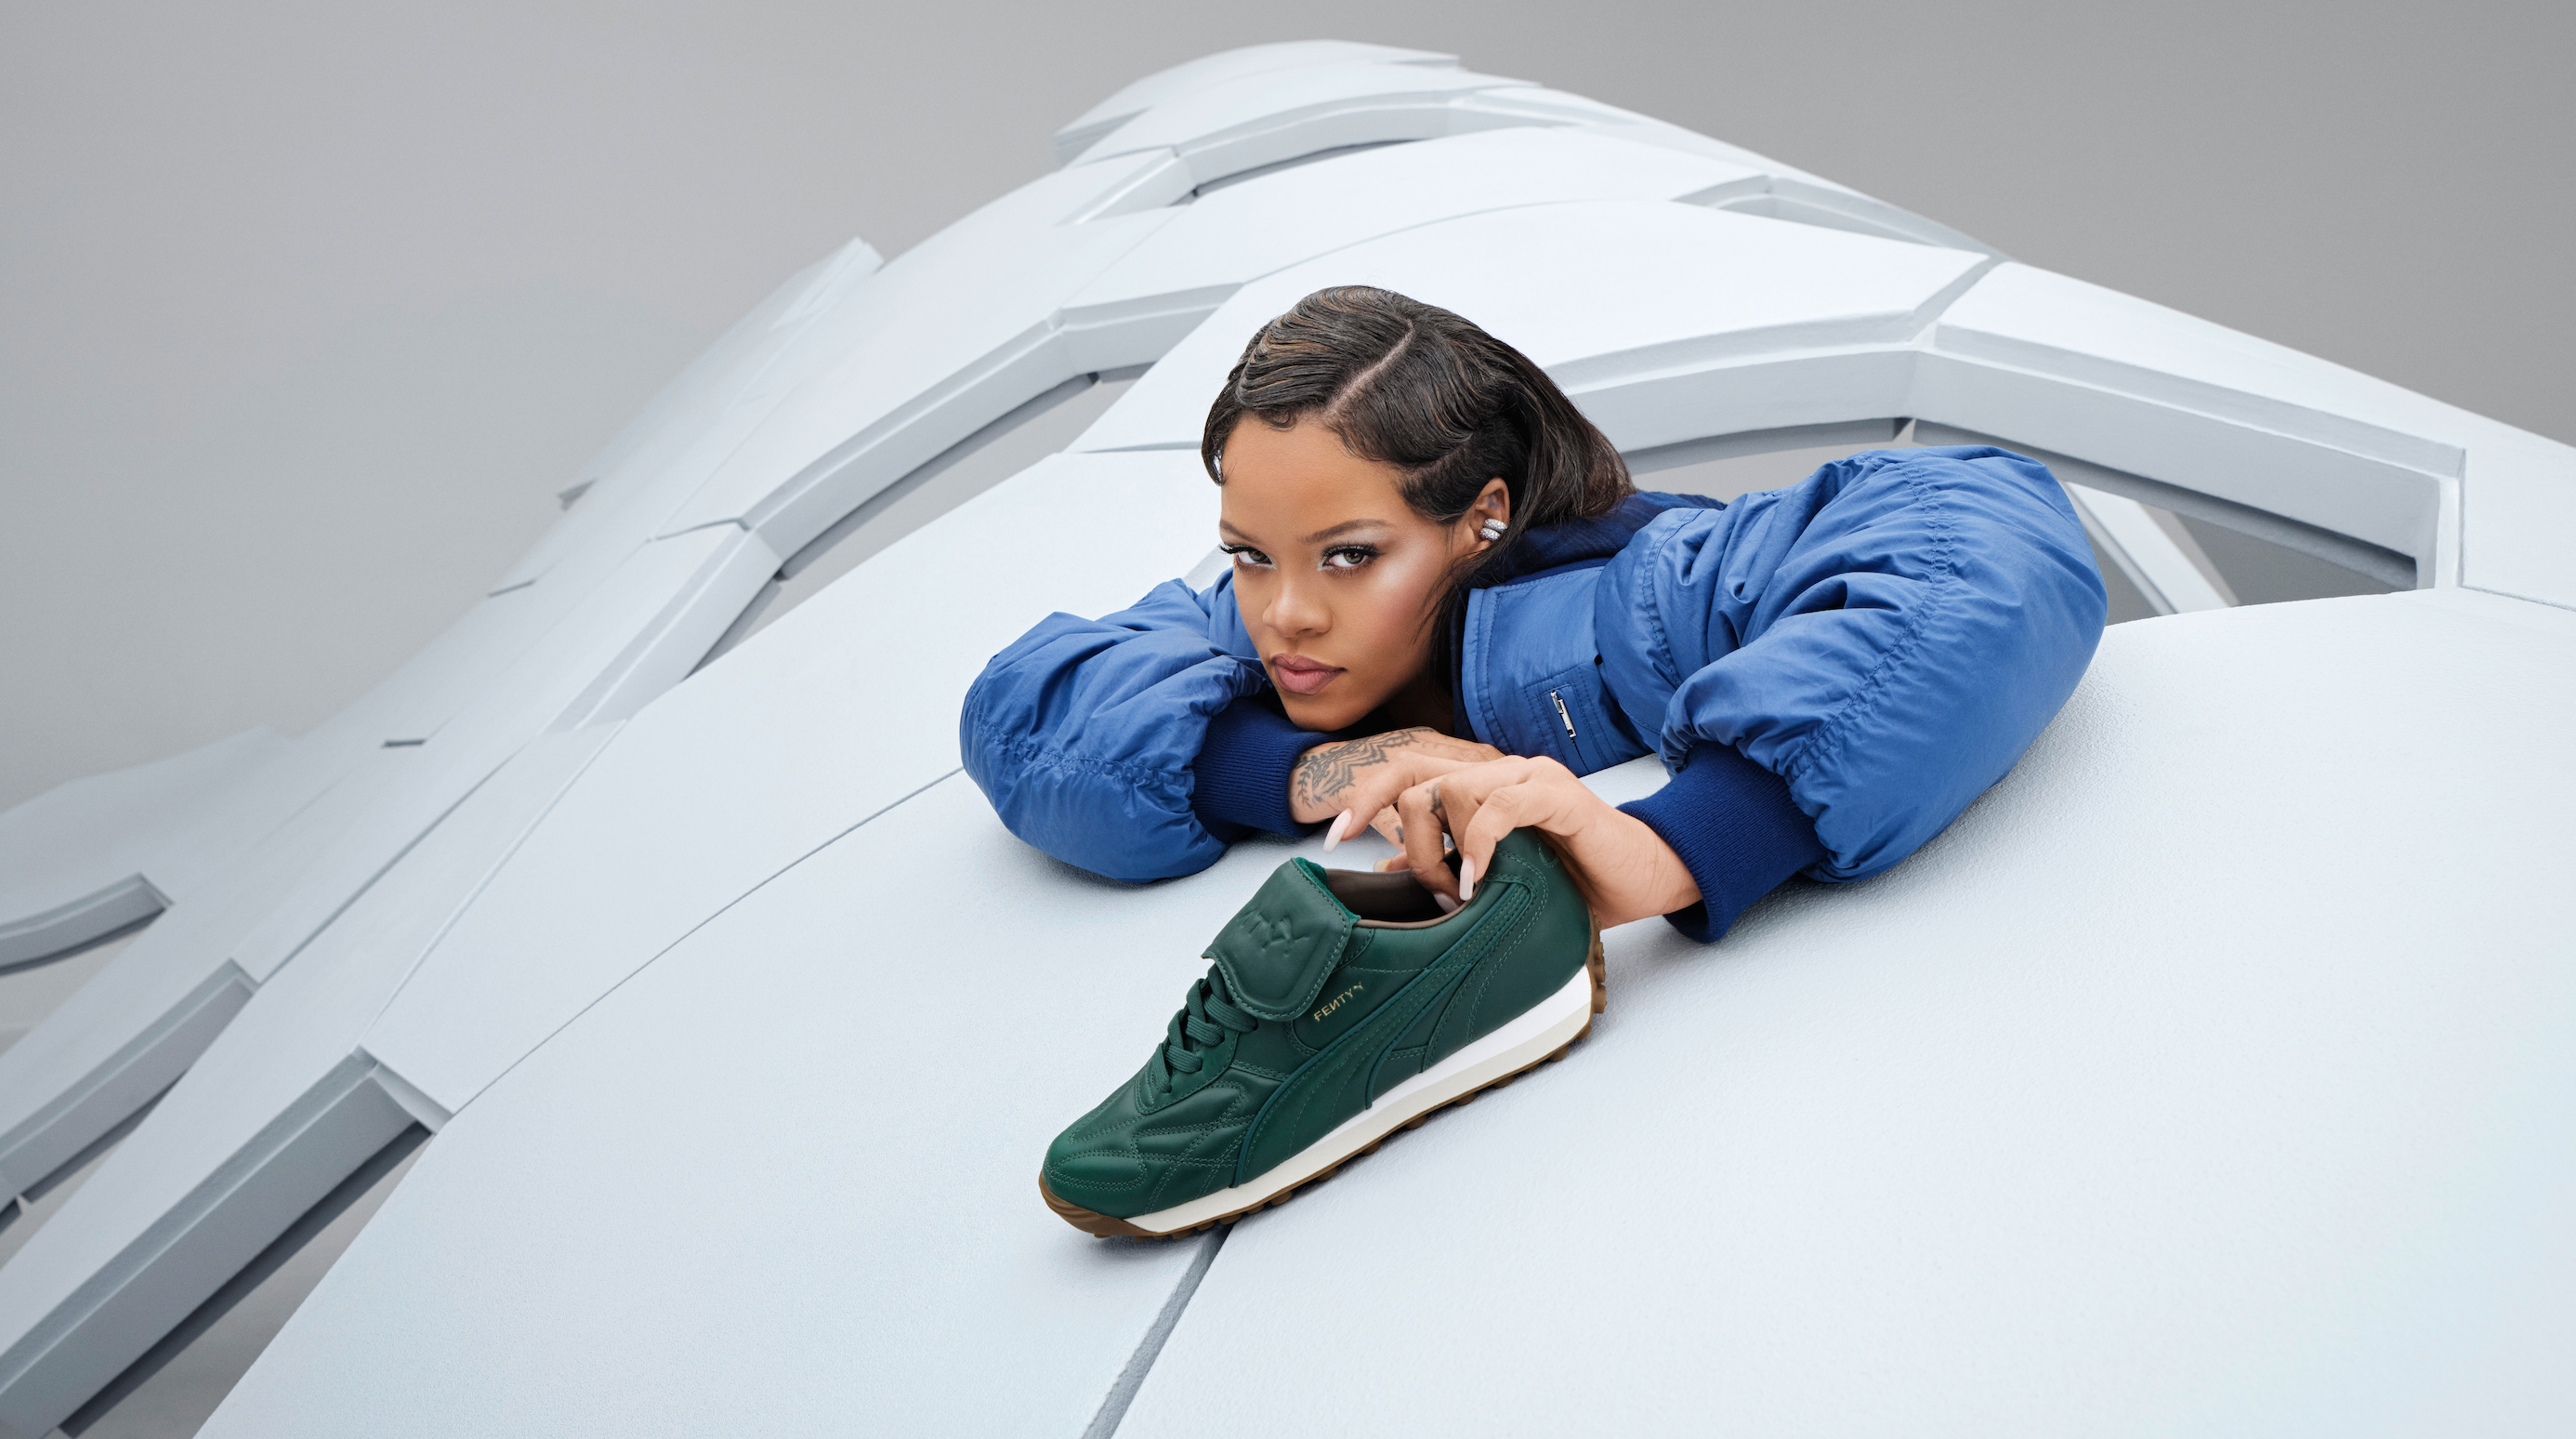 Rihanna’s FENTY X PUMA Announces Two New Colorways For The Avanti Sneaker